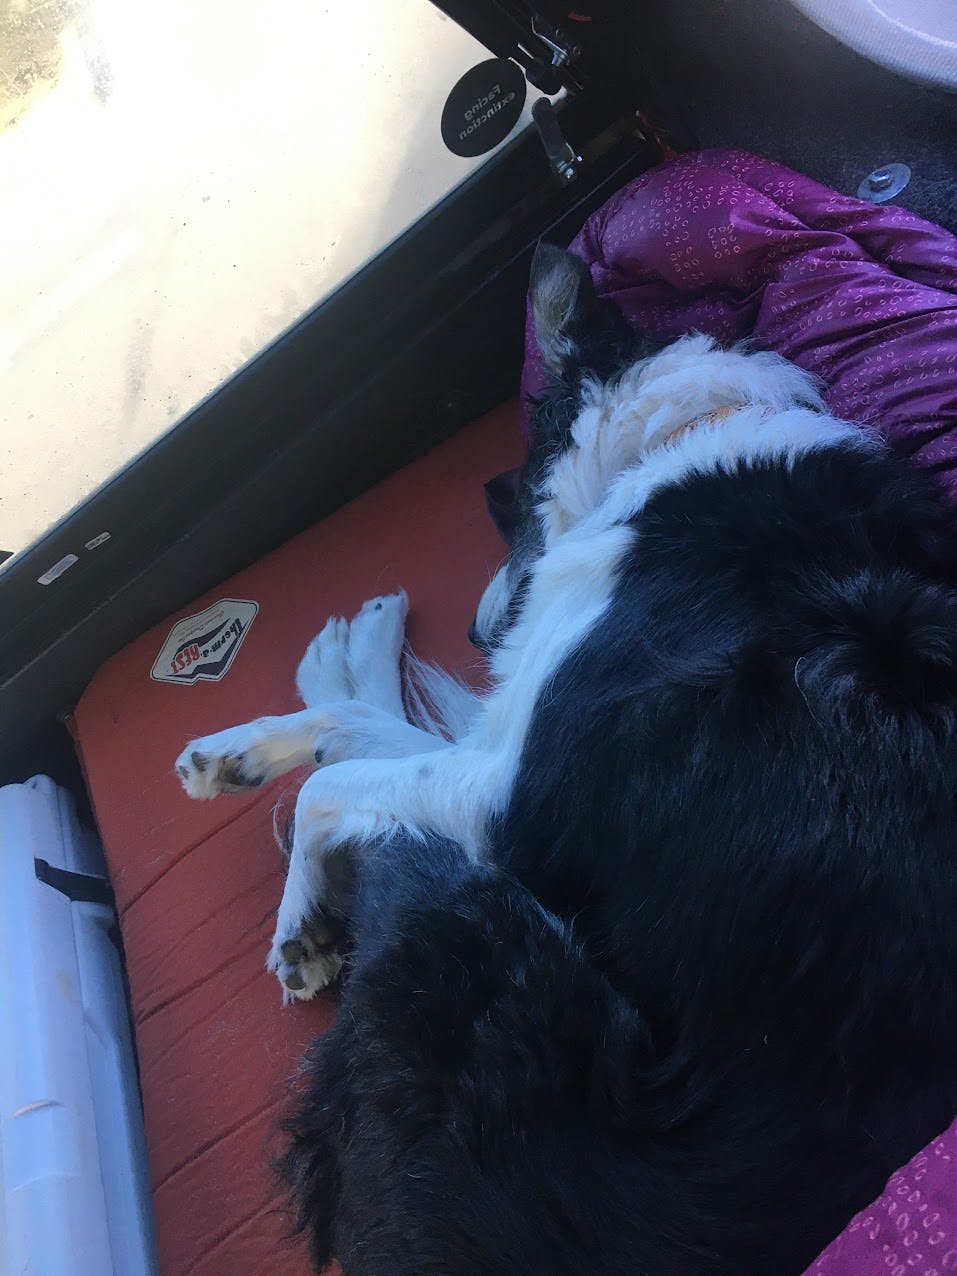 A dog snuggled up on a sleeping pad. 